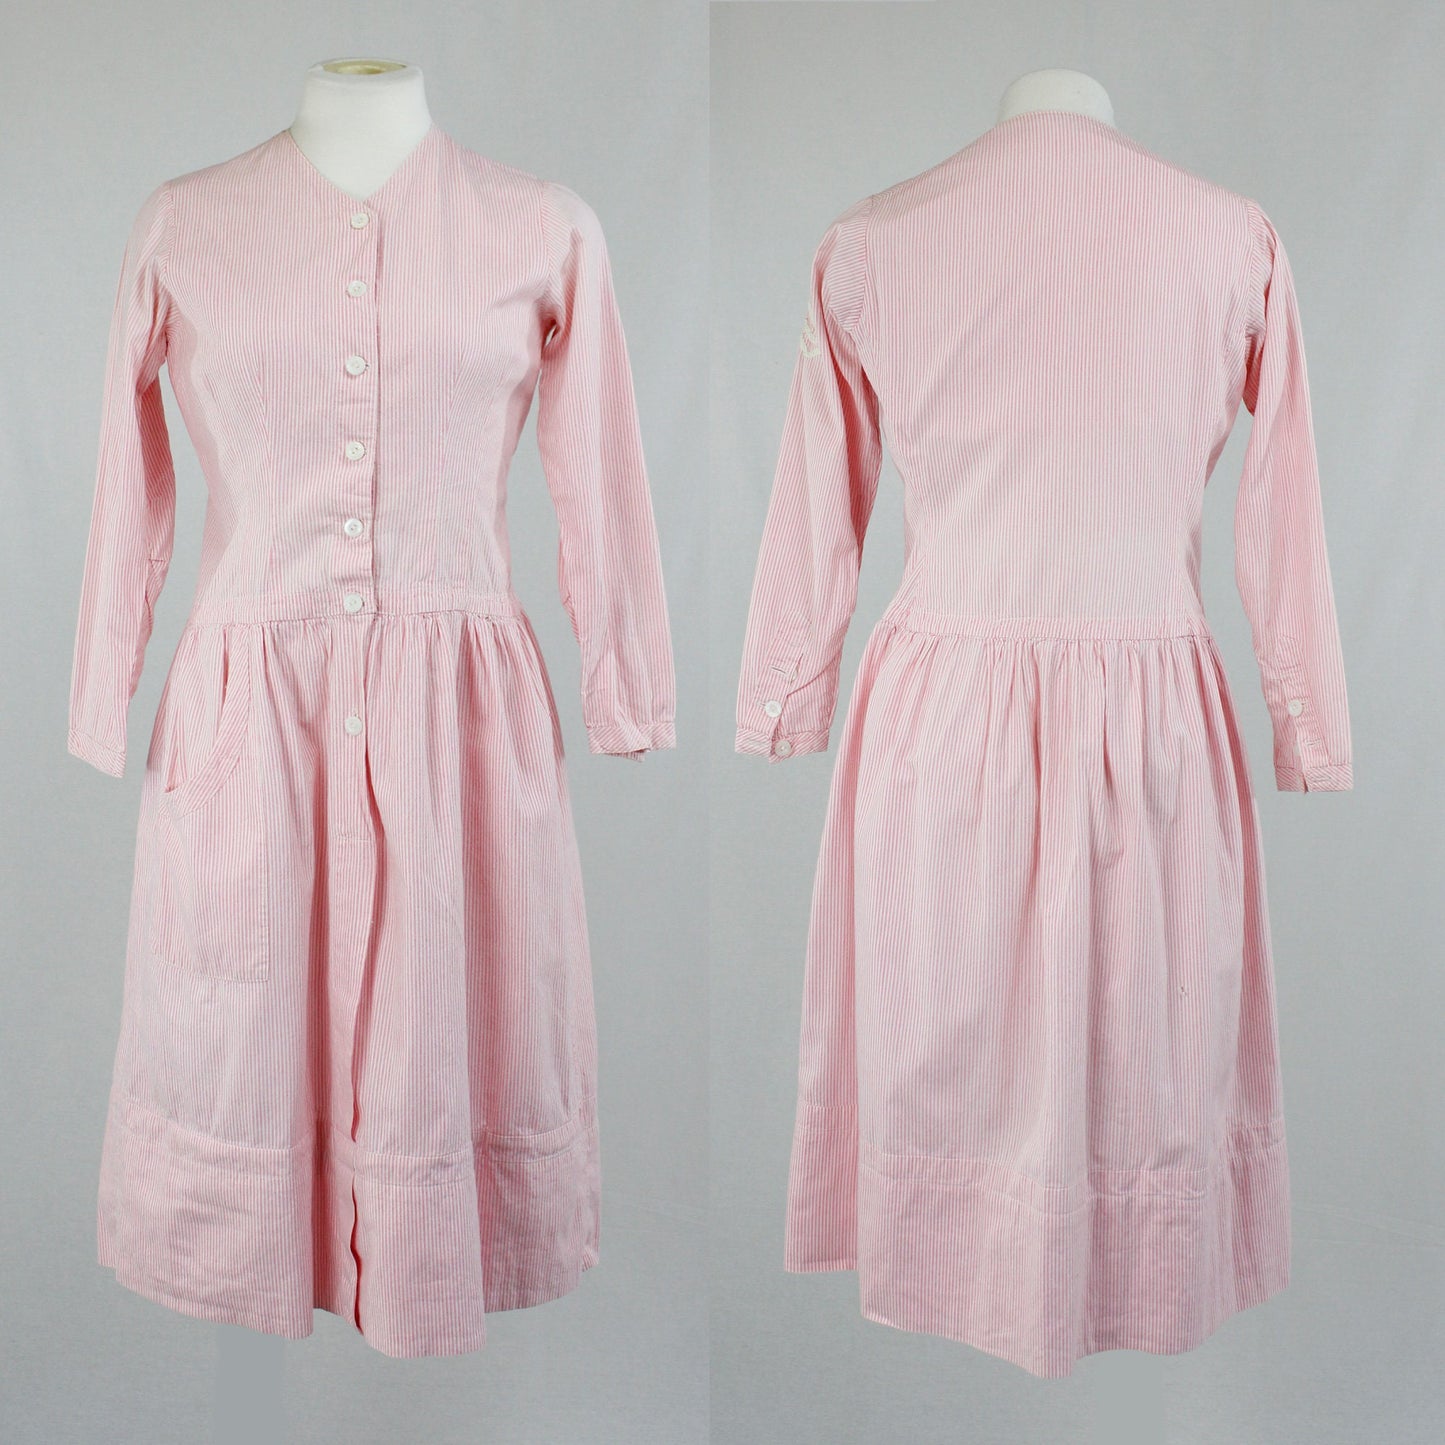 Vintage 1950s Handmade Cottony Uniform Dress Candy Striper Military Field Nurse